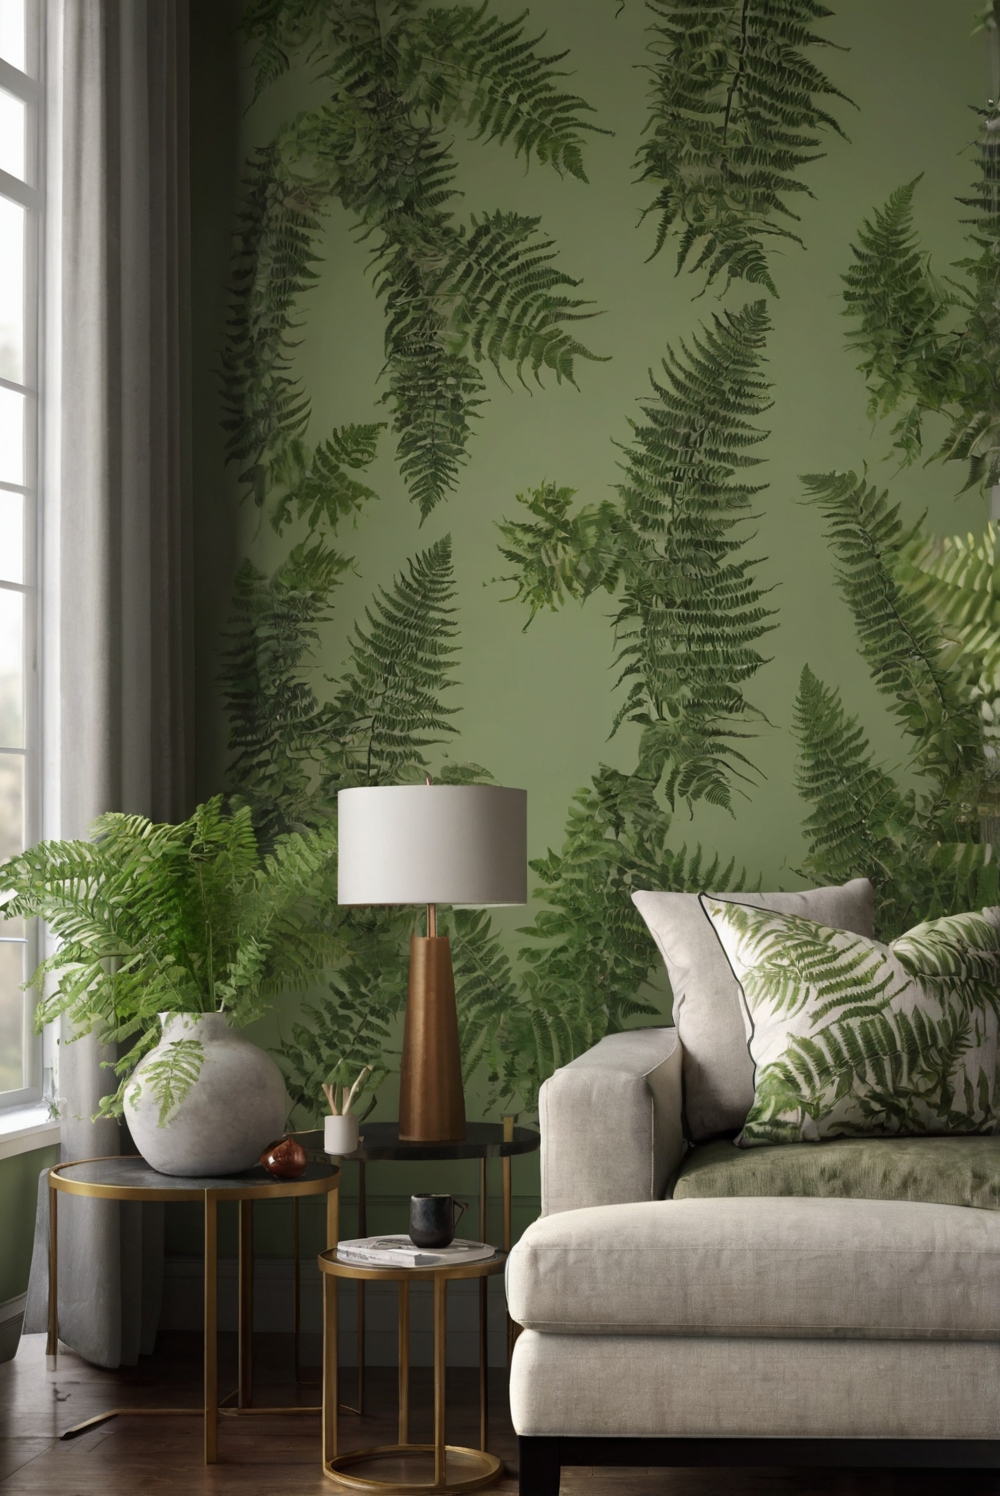 Soft Fern paint color, Fresh Fern vibes, greenery interior design, nature-inspired decor, botanical home decor, leafy green walls, serene nature aesthetics